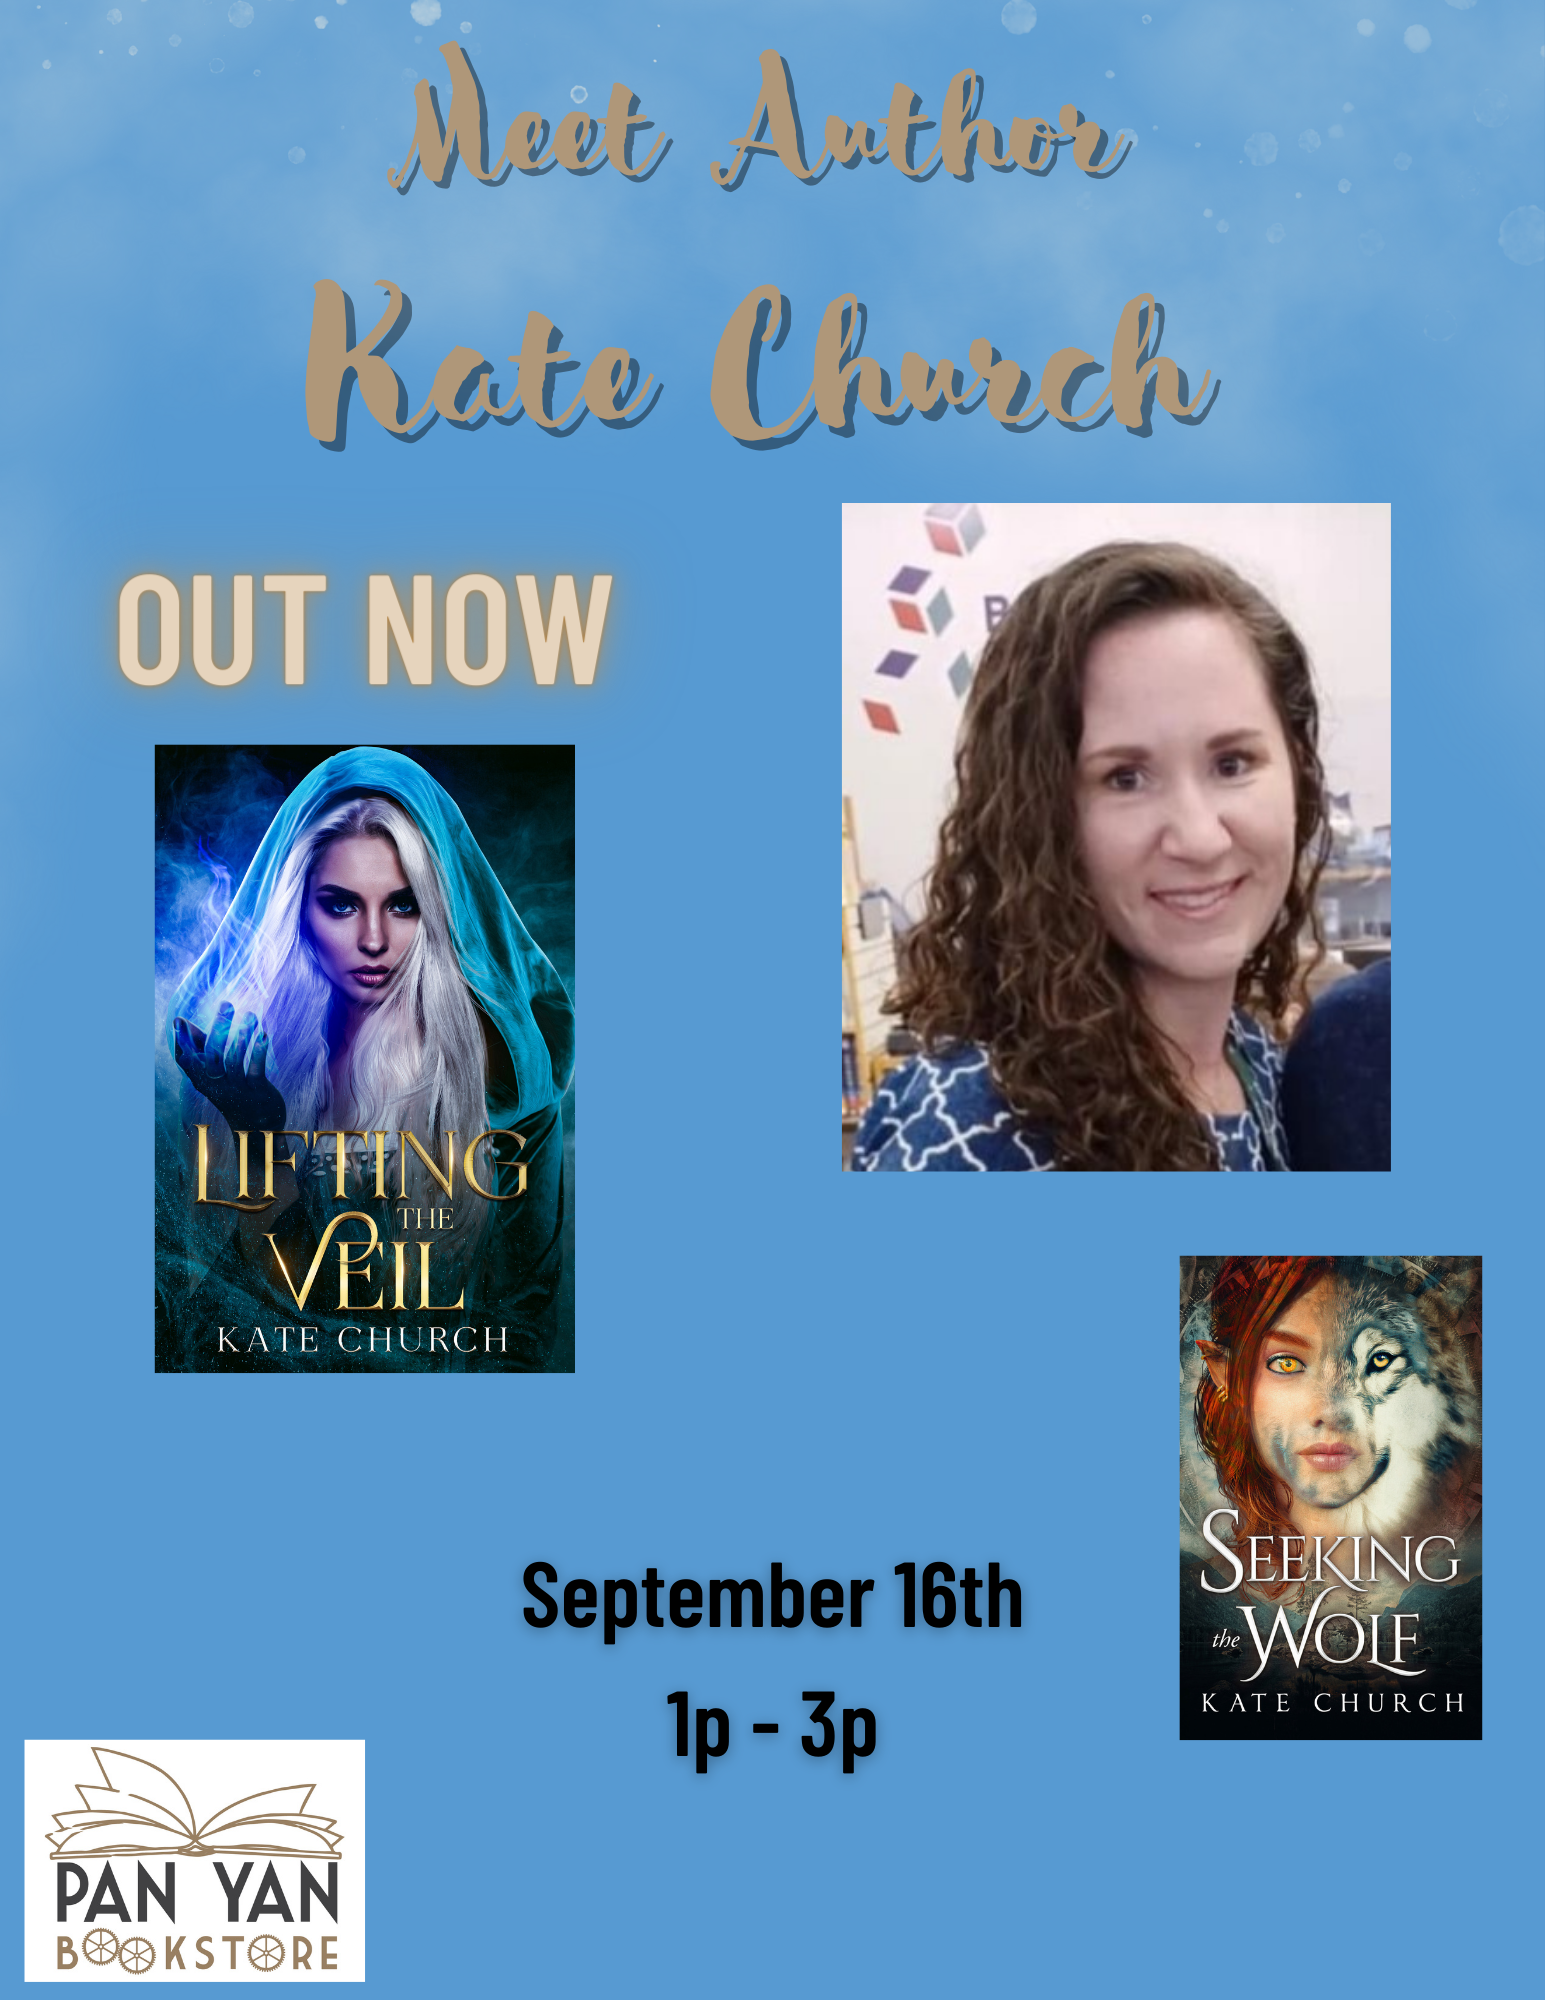 Meet Author Kate Church